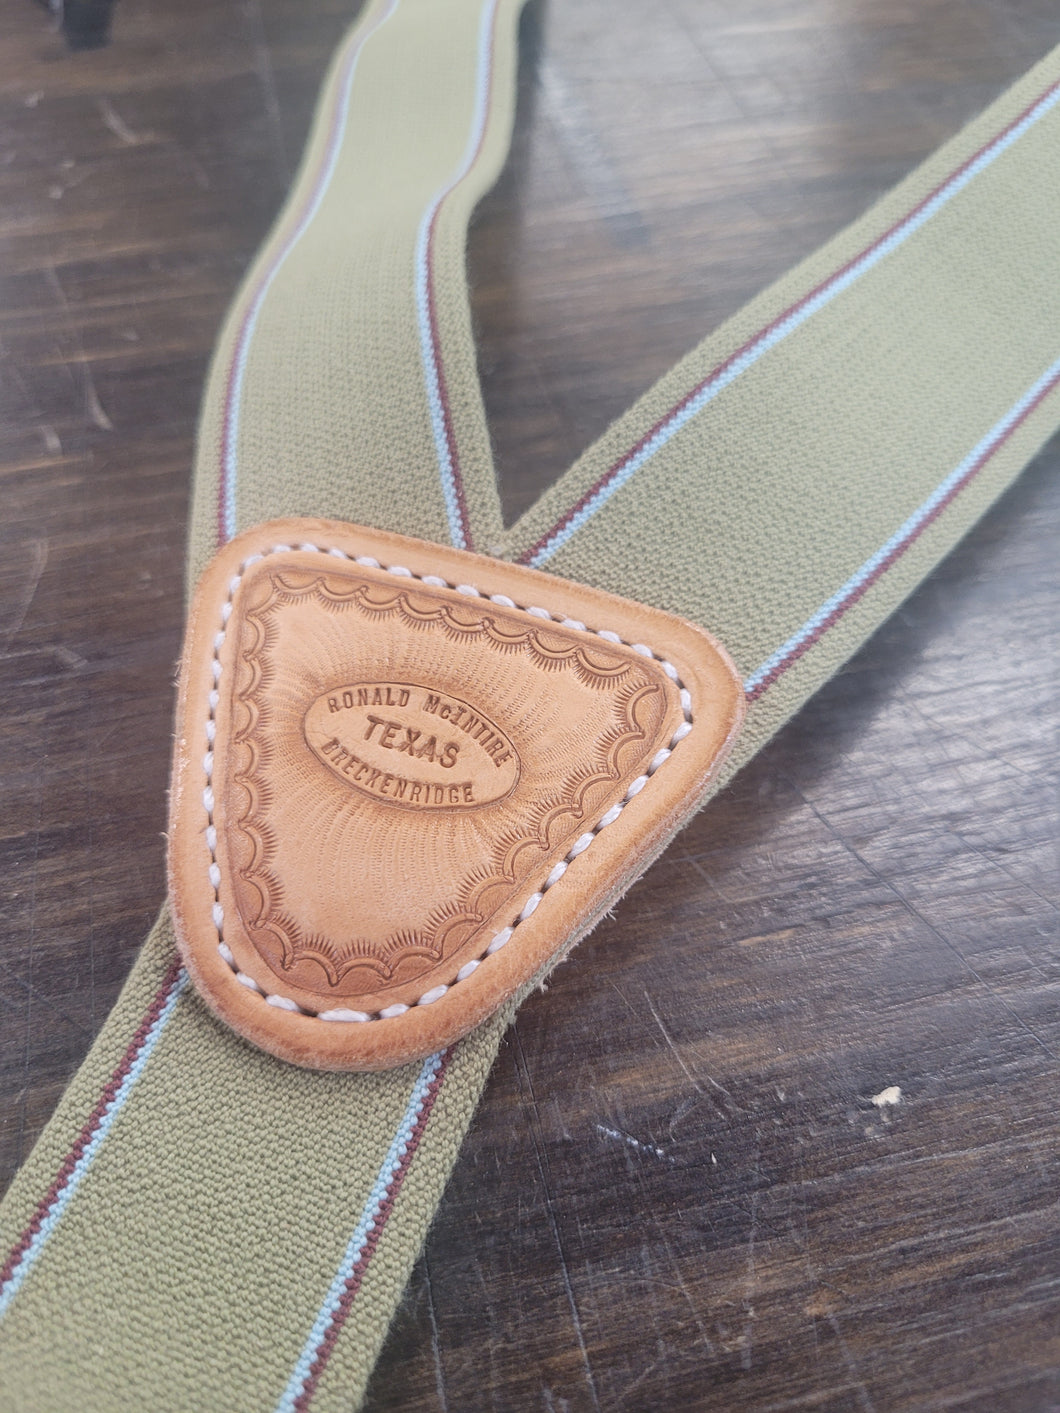 Suspenders - Handmade Leather and Elastic Suspenders